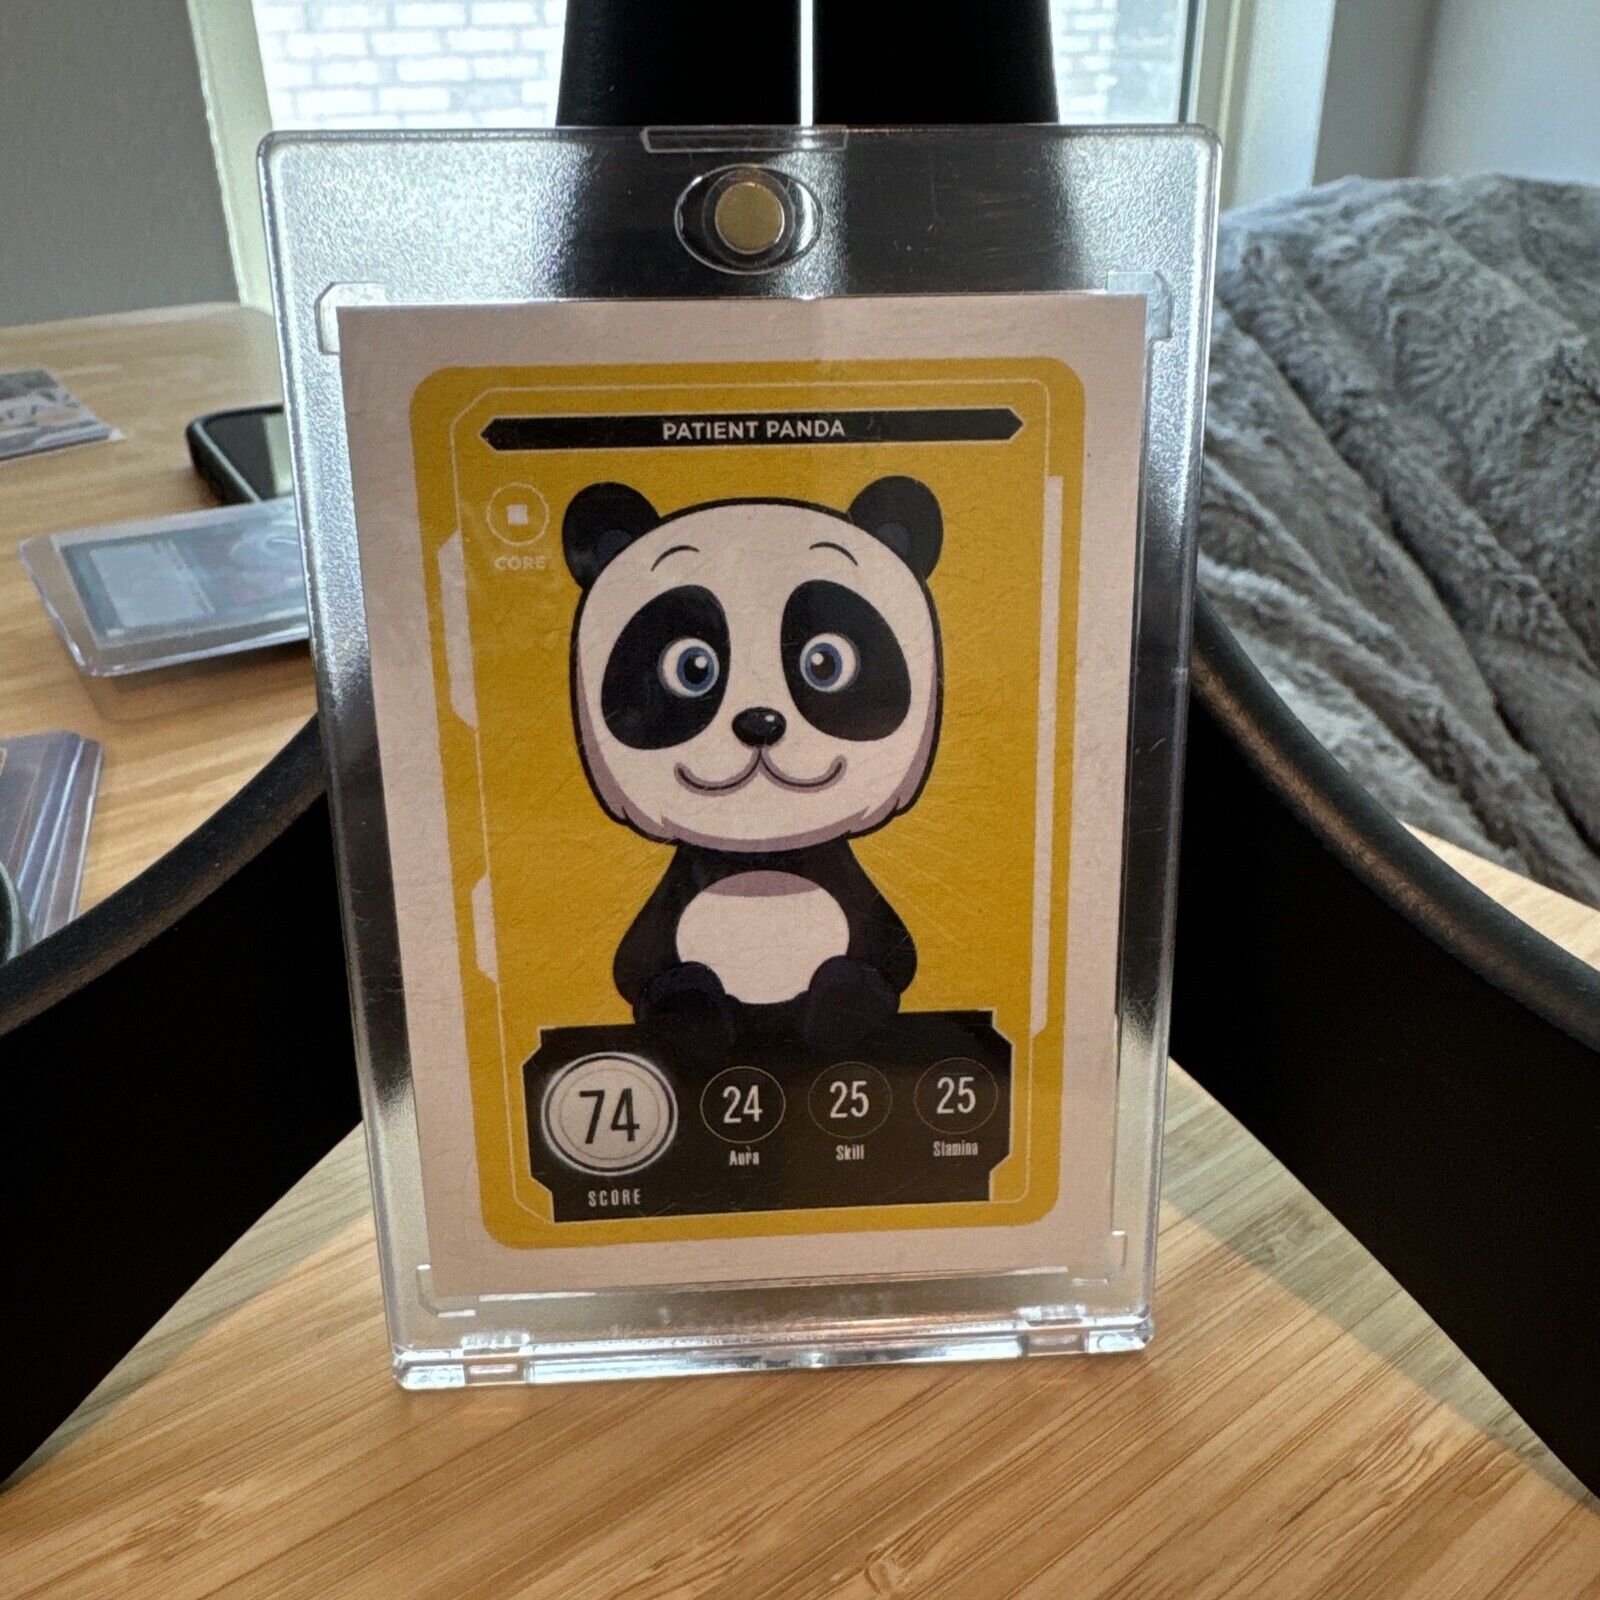 vee friends series 2 trading cards Patient Panda